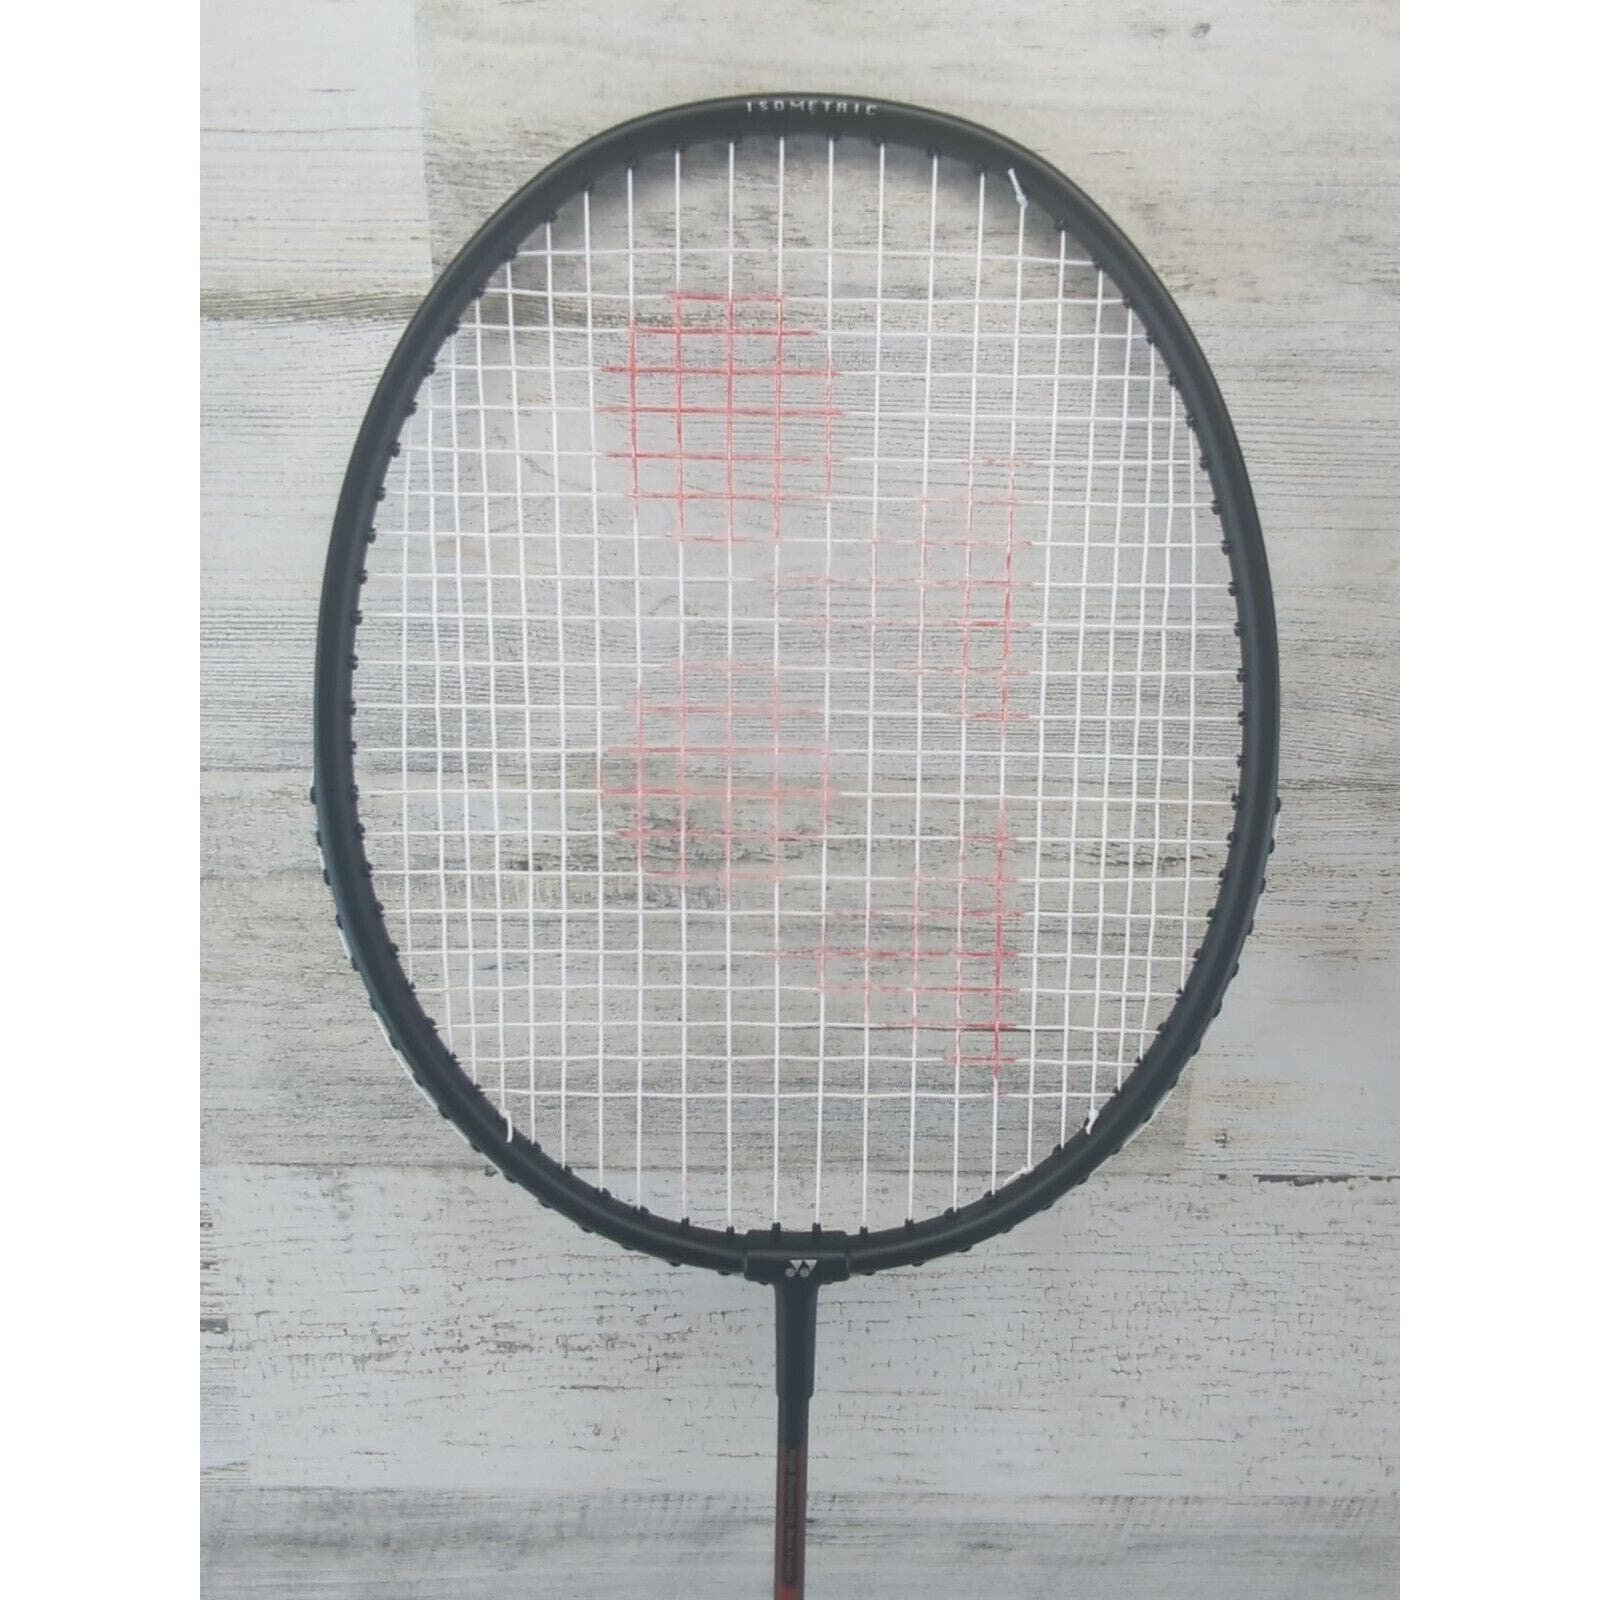 YONEX GR 303i Combo Badminton Racquet with Full Cover, Set of 2 Black gaFYYl2Fk